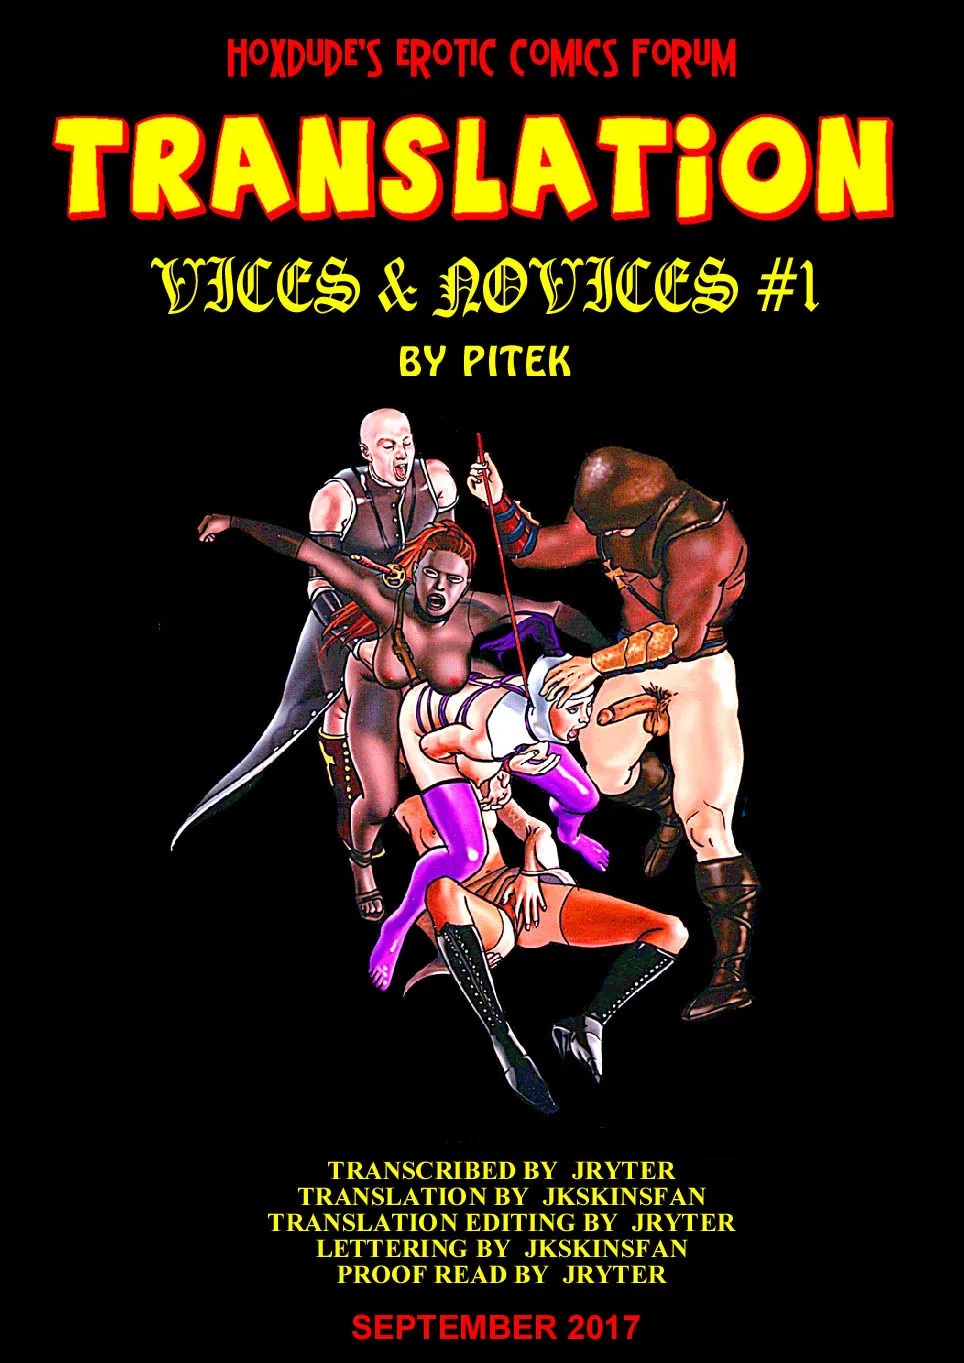 Vices & Novices by Pitek - Page 1